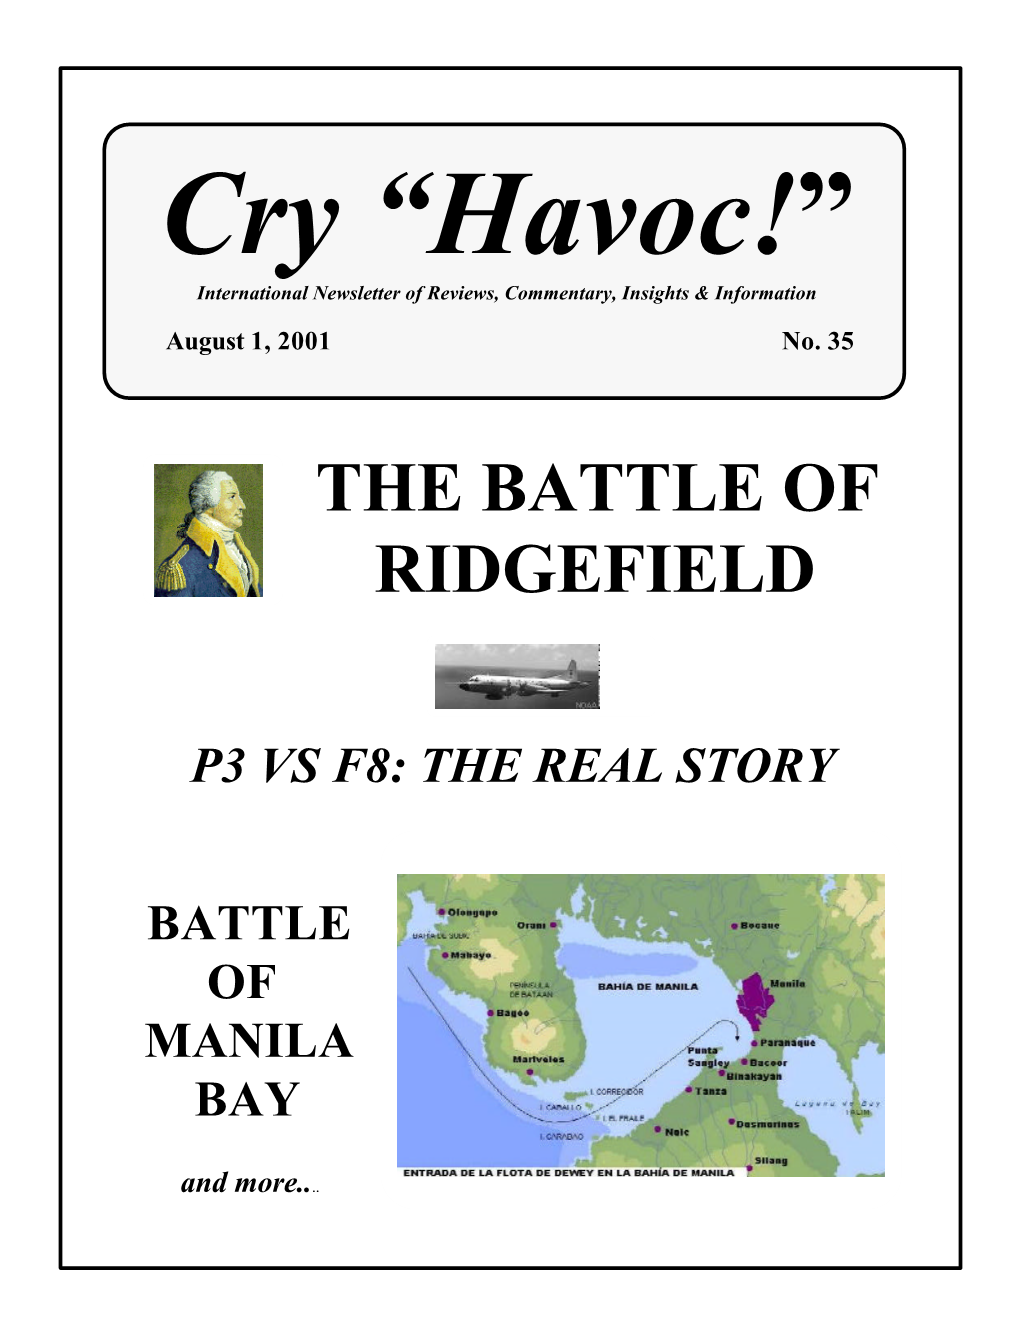 The Battle of Ridgefield